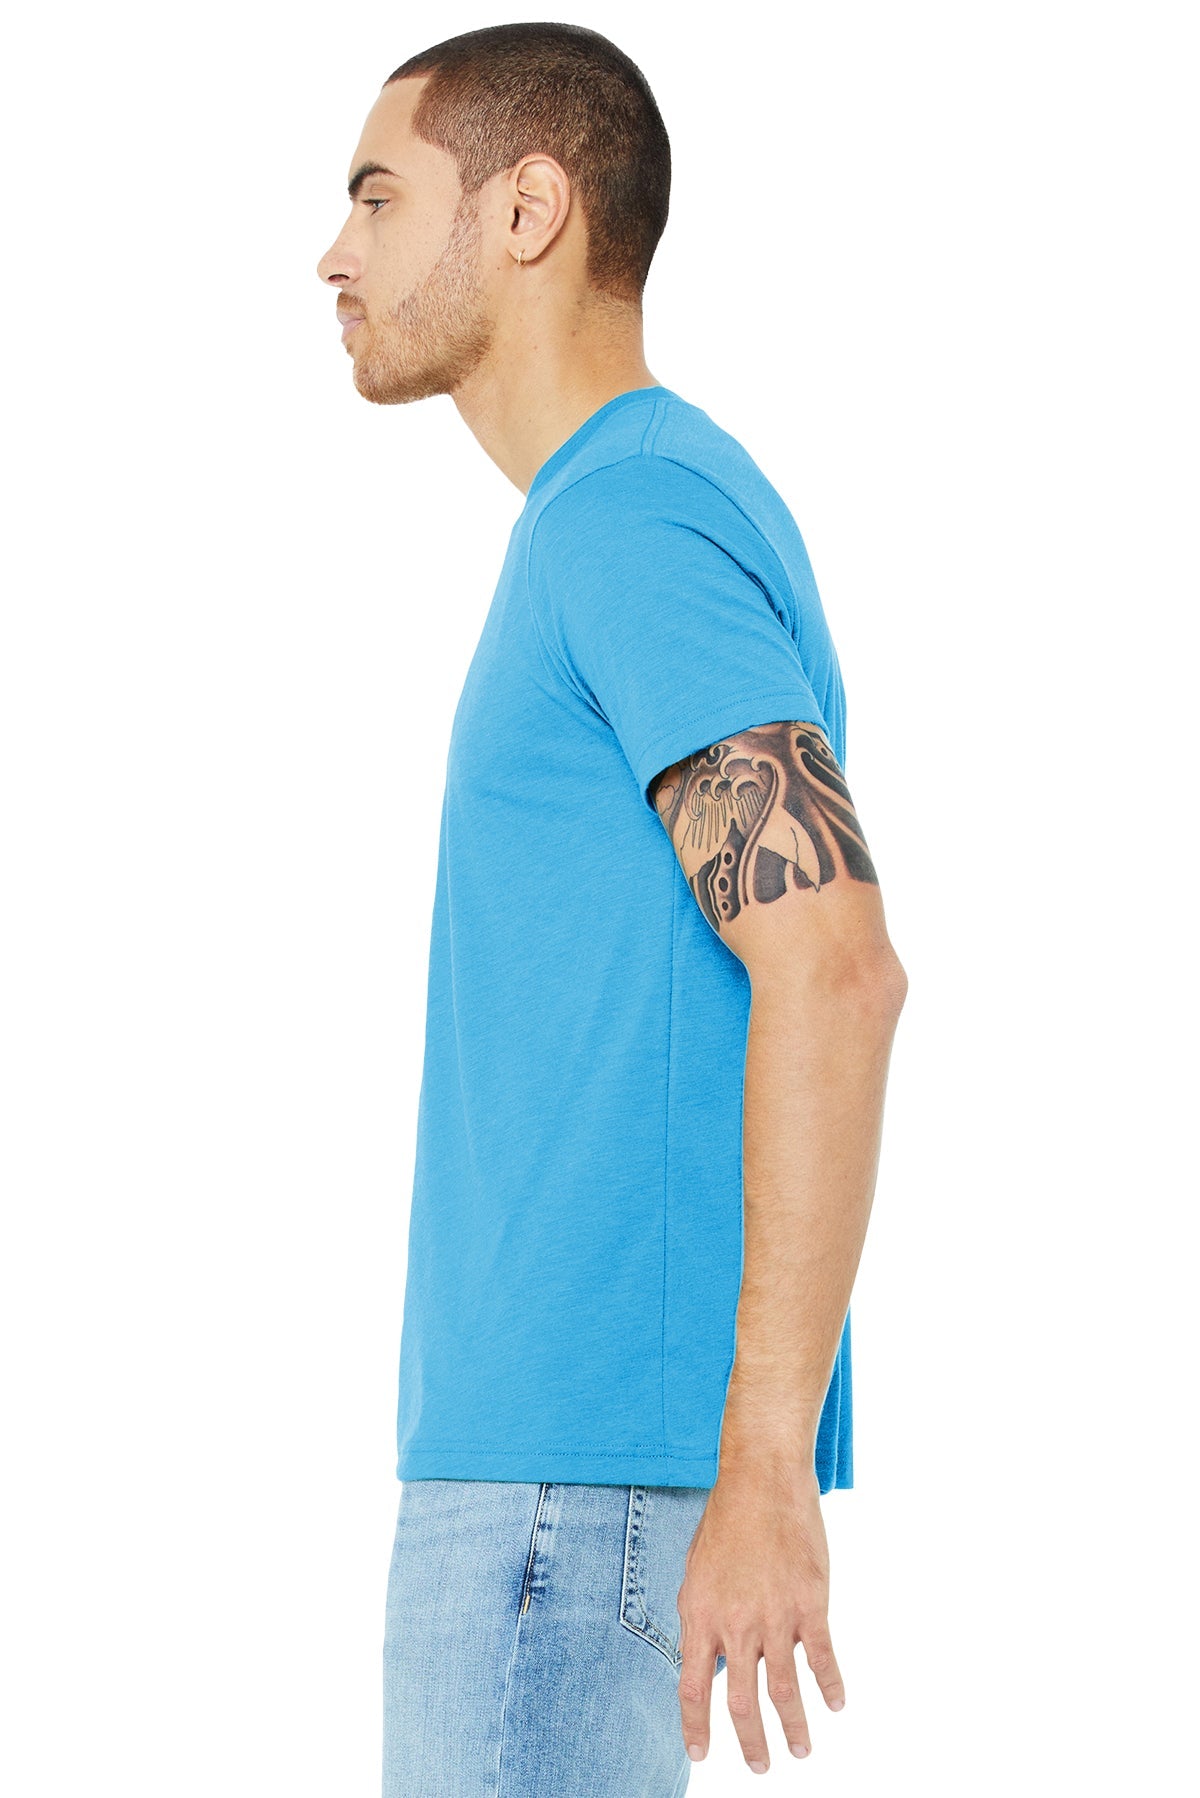 bella + canvas unisex triblend short sleeve t-shirt 3413c aqua triblend